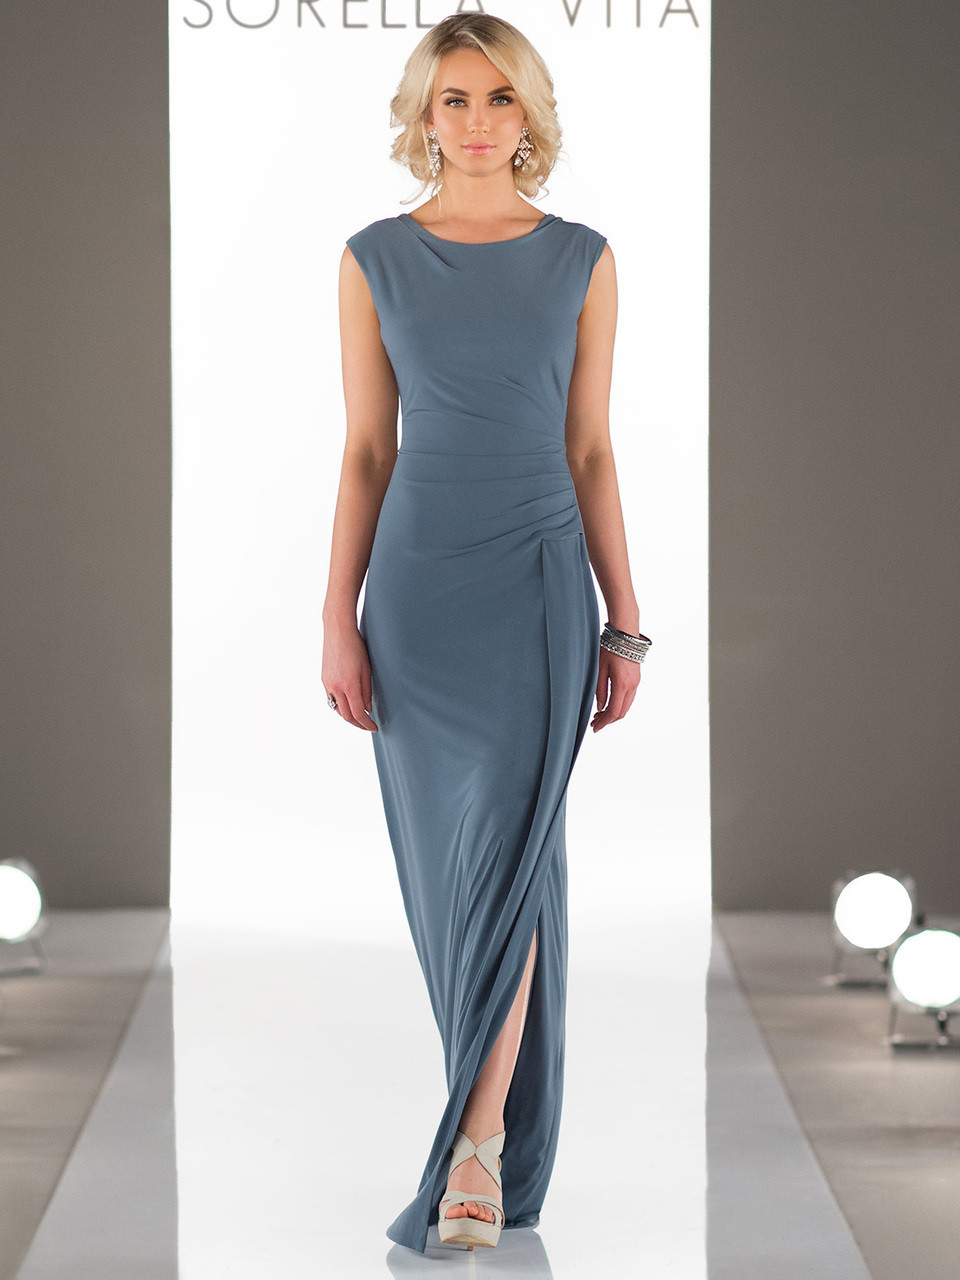 Sorella Vita Dress Style 8868 (Slate-Size 10) Prom, Ball., Black-tie, Bridesmaid, Pageant